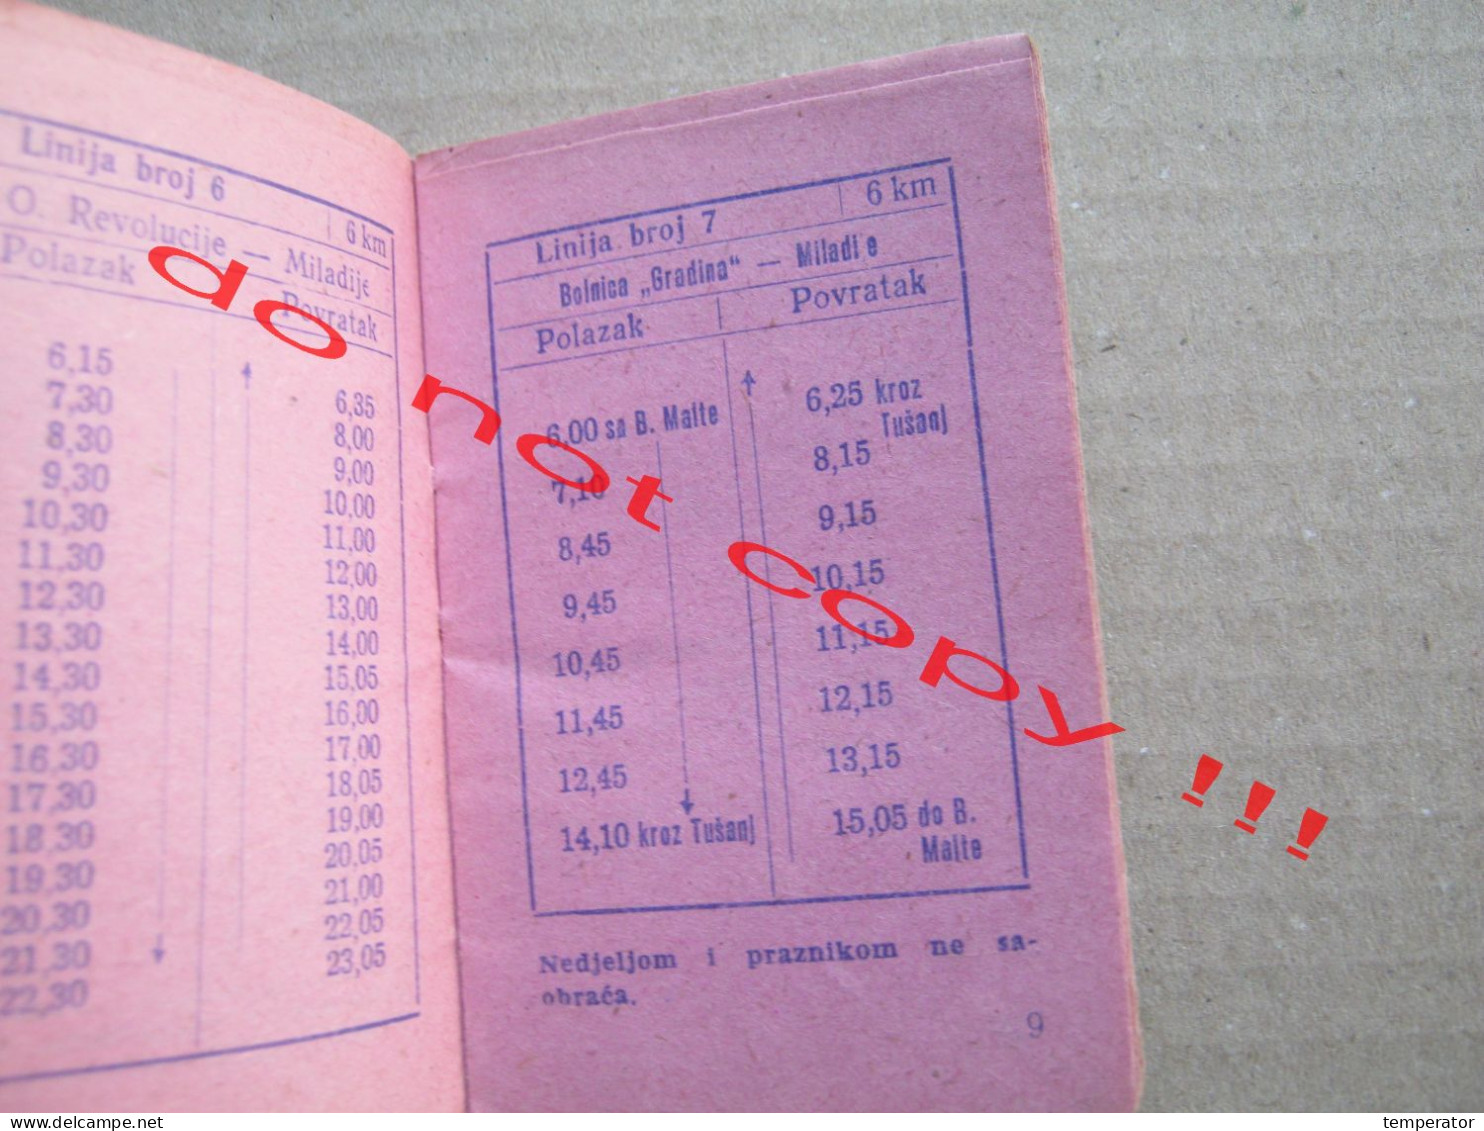 Bus Timetable, Red Voznje - SFRJ Yugoslavia, Bosnia, Tuzla ( 1966 ) 32 Pages - Europa